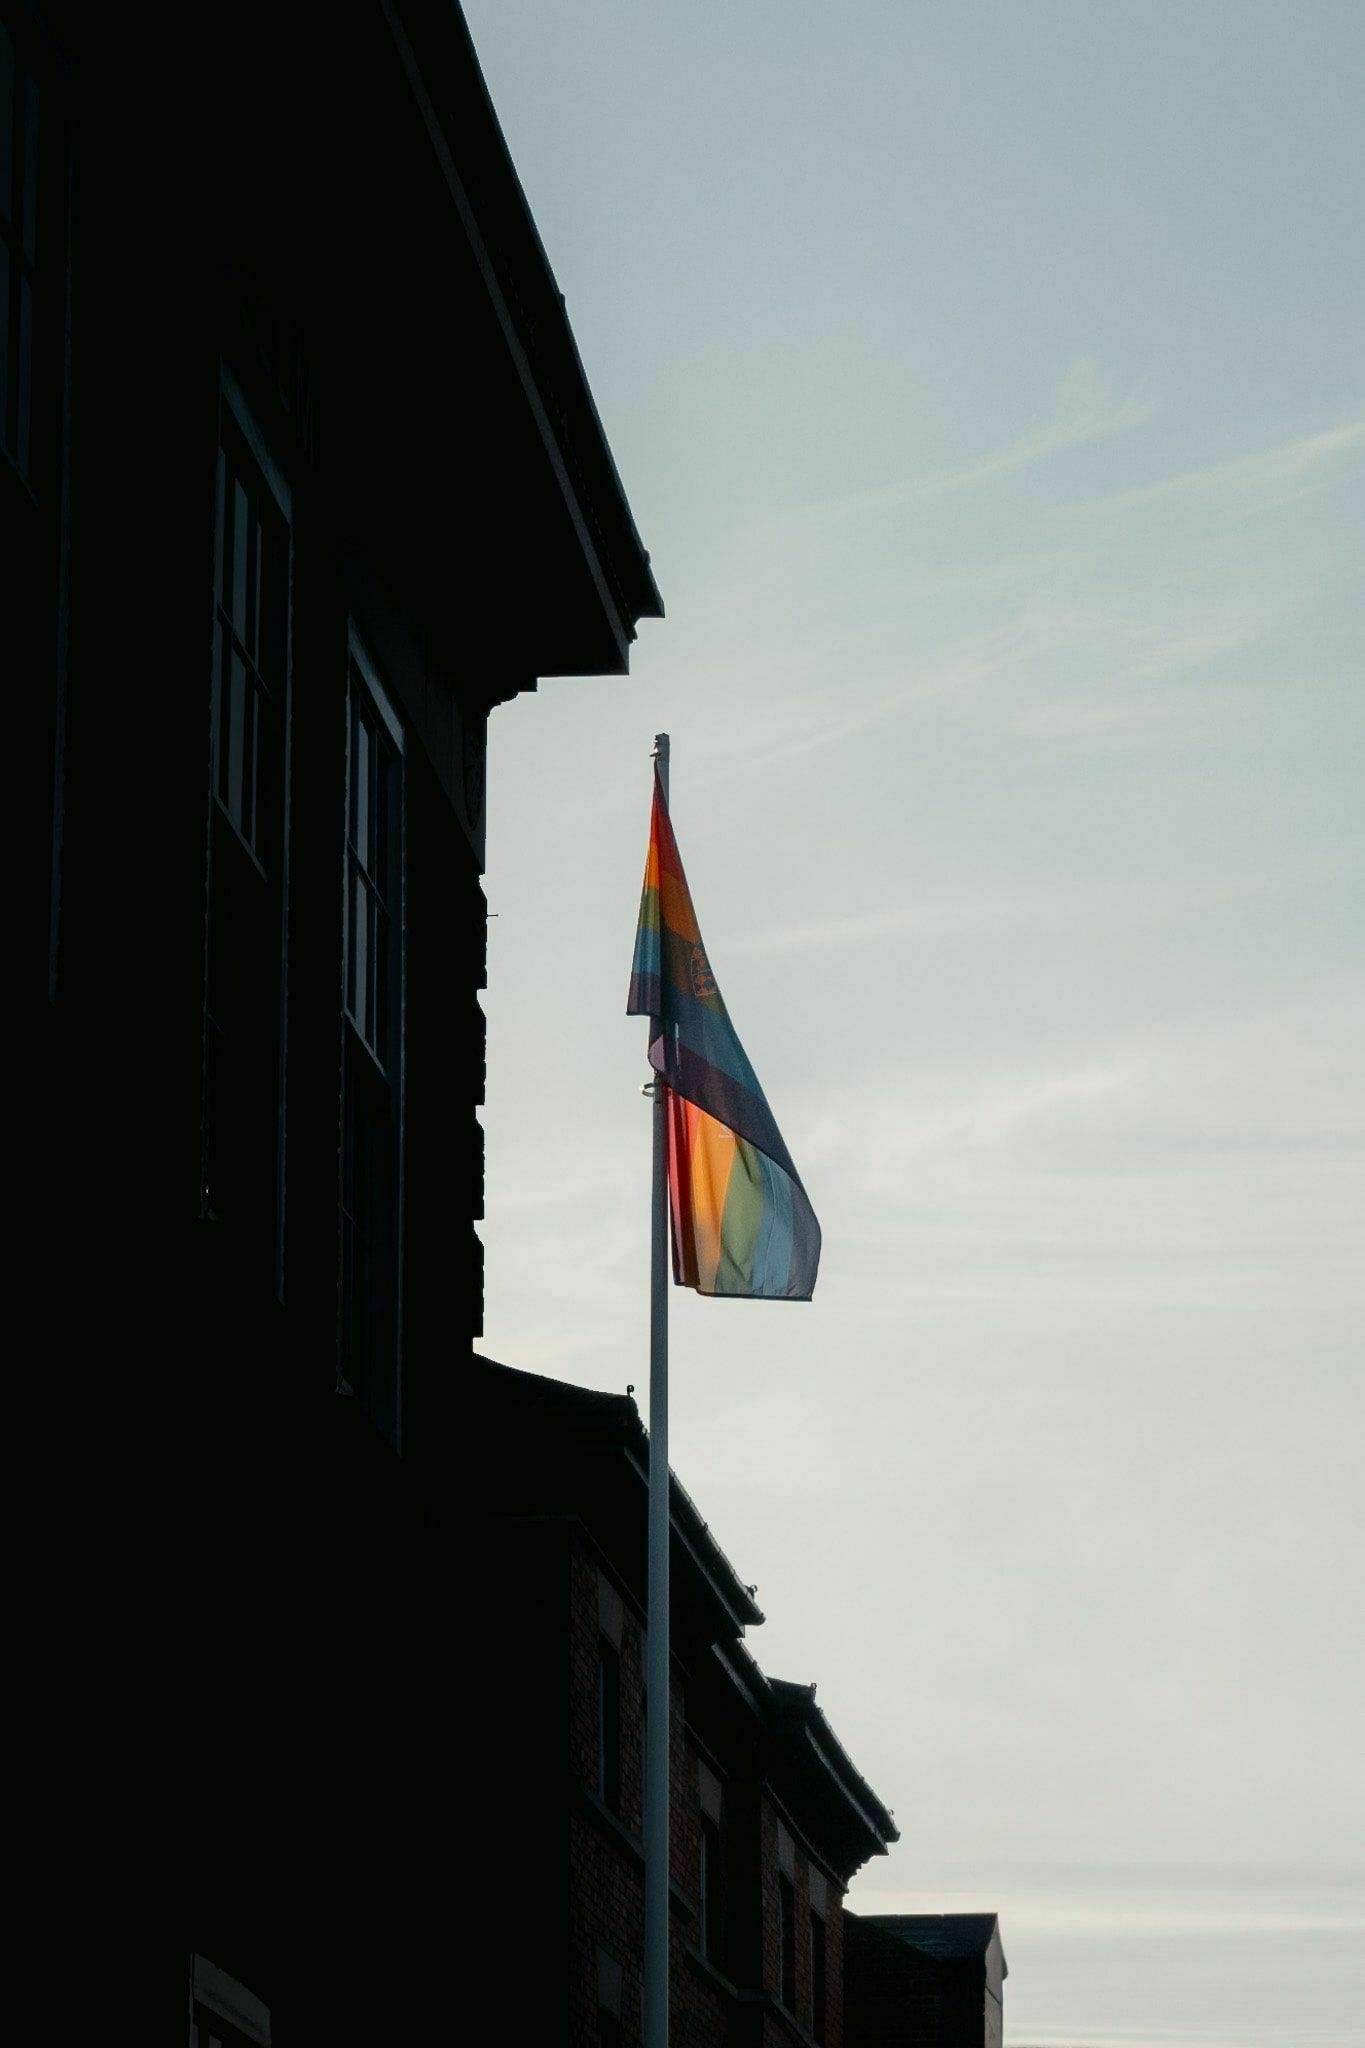 an lgbtq flag saying high in the sunshine